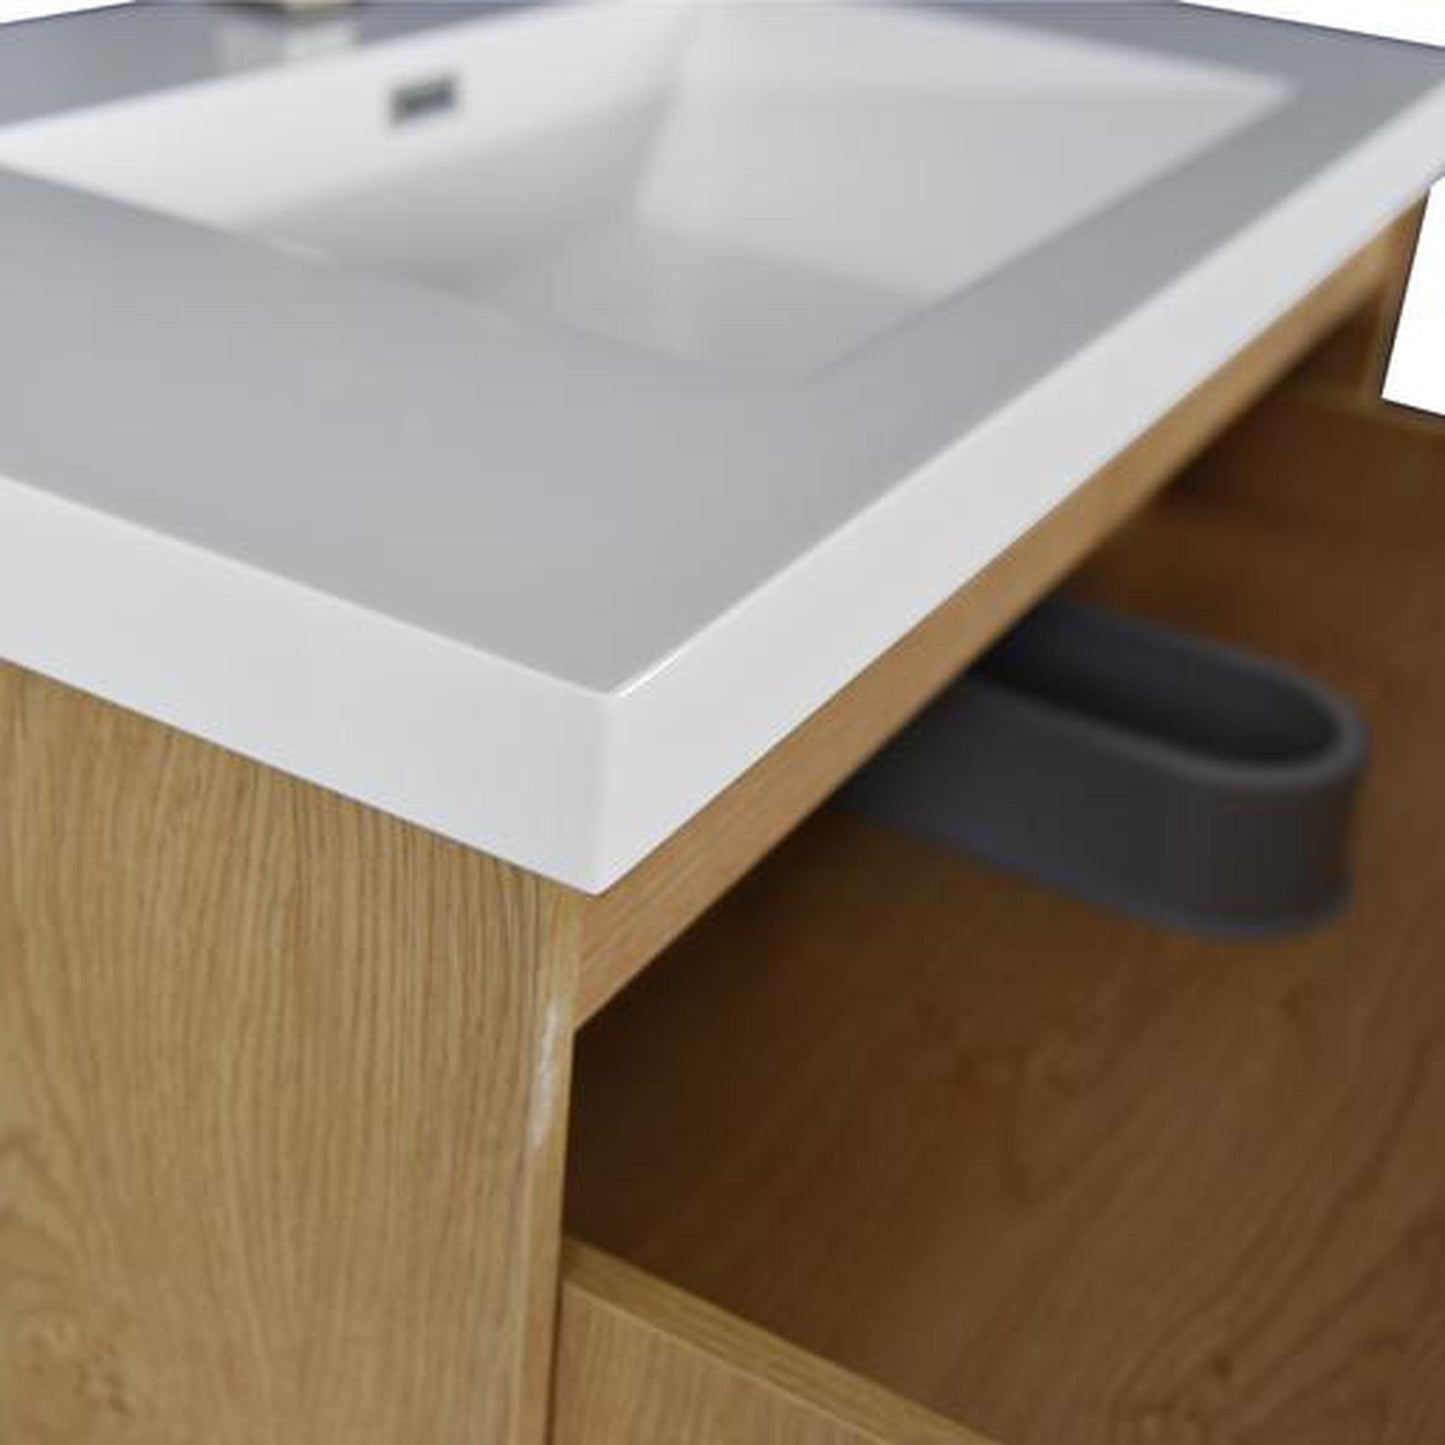 Moreno Bath Angeles 36" New England Oak Freestanding Vanity With Single Reinforced White Acrylic Sink